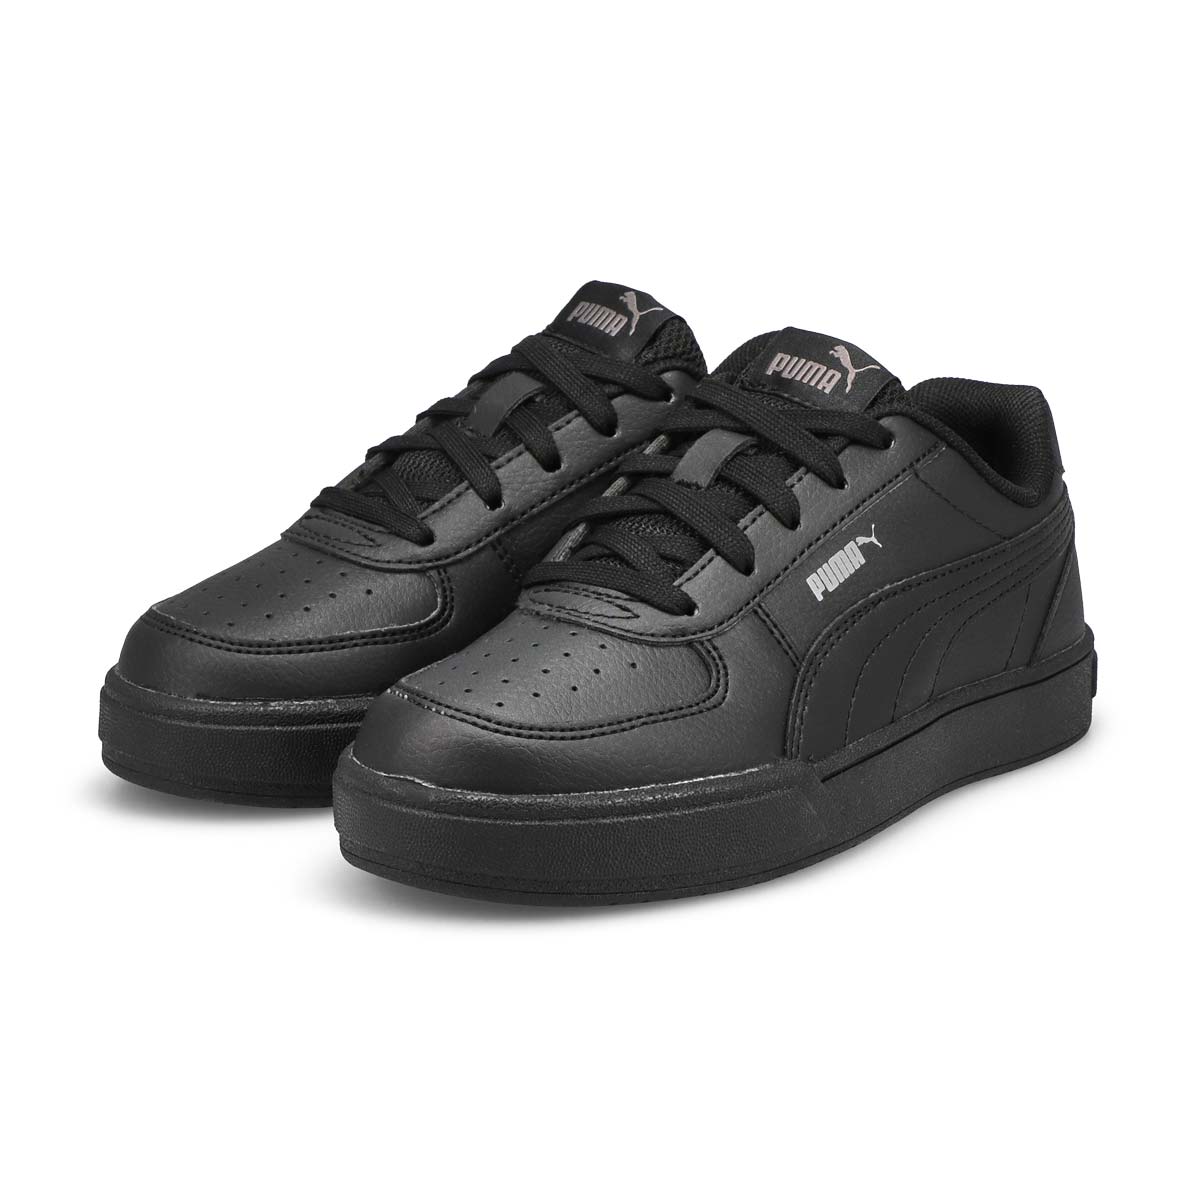 Kids' Caven Jr PS Sneaker -Black/Steel Grey